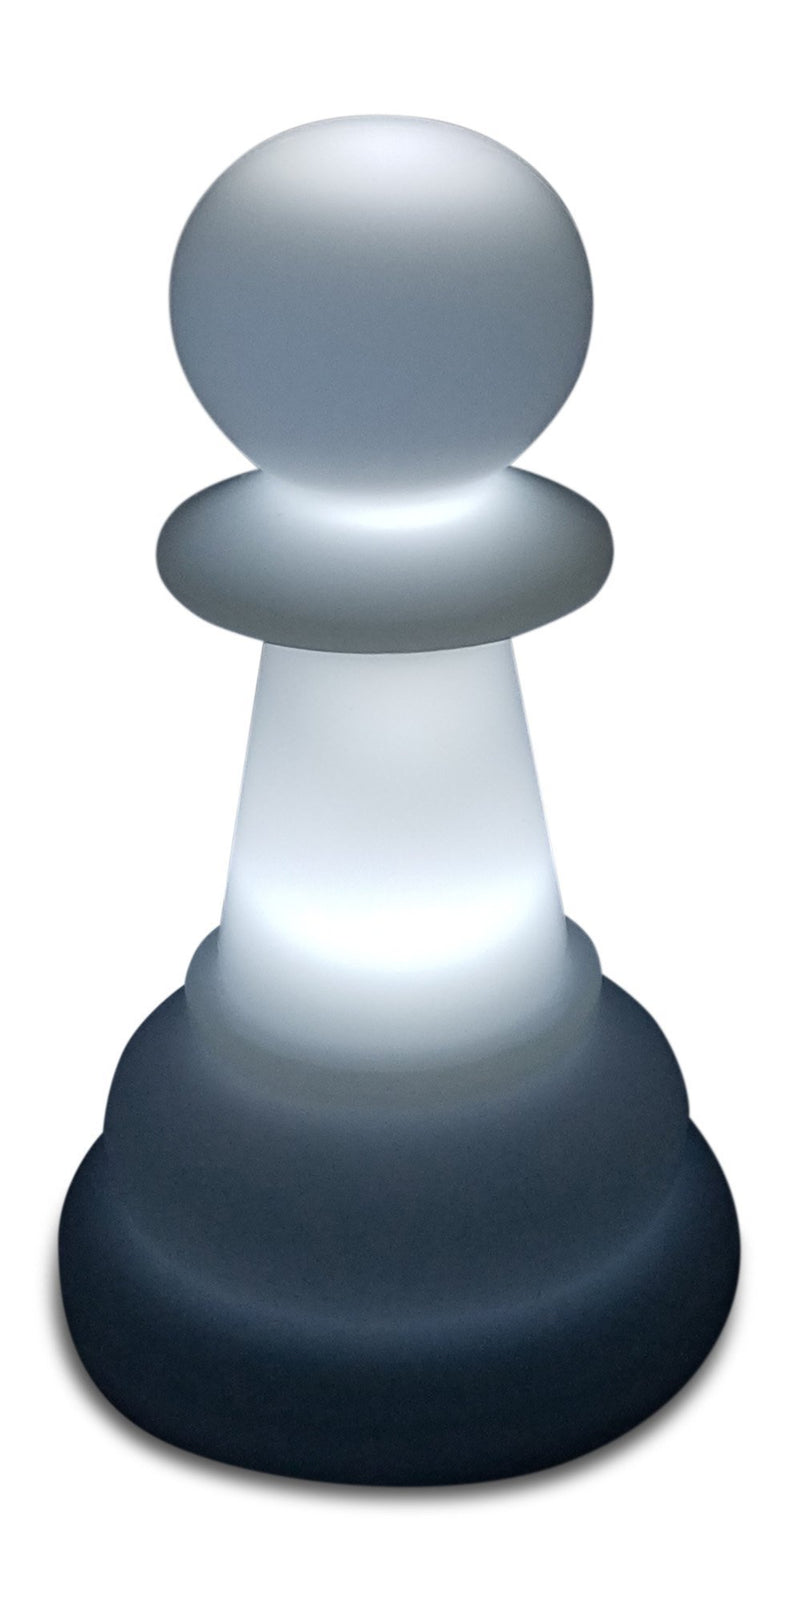 MegaChess 12 Inch Premium Plastic Pawn Light-Up Giant Chess Piece - White |  | GiantChessUSA